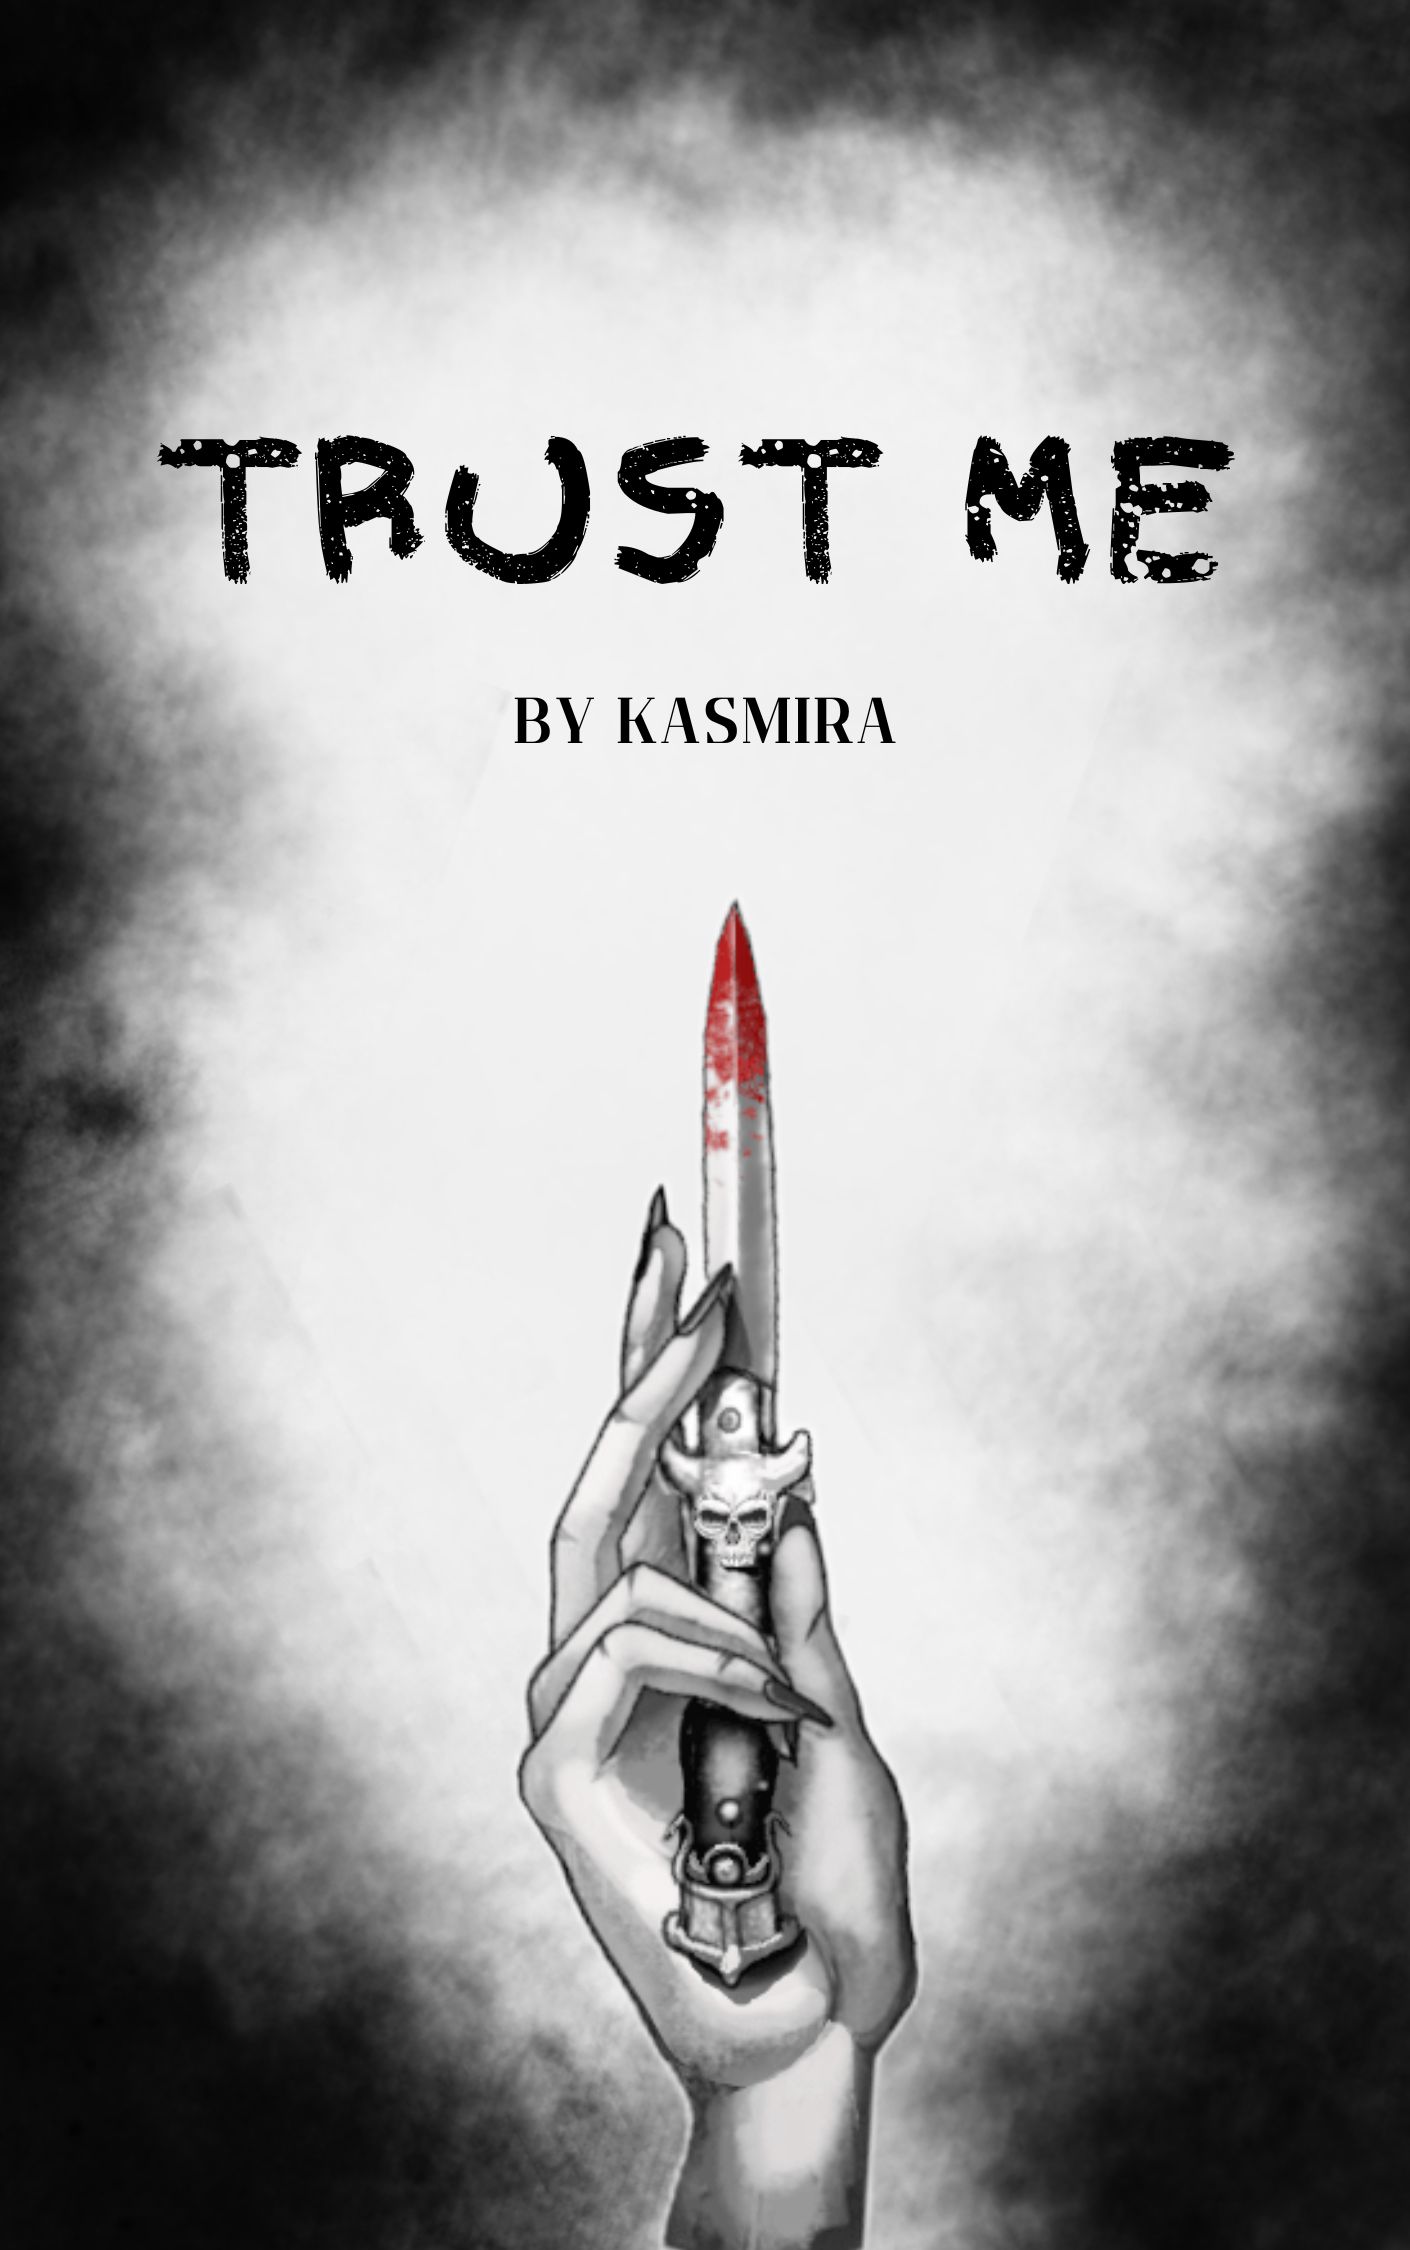 Book Launch “Trust Me”